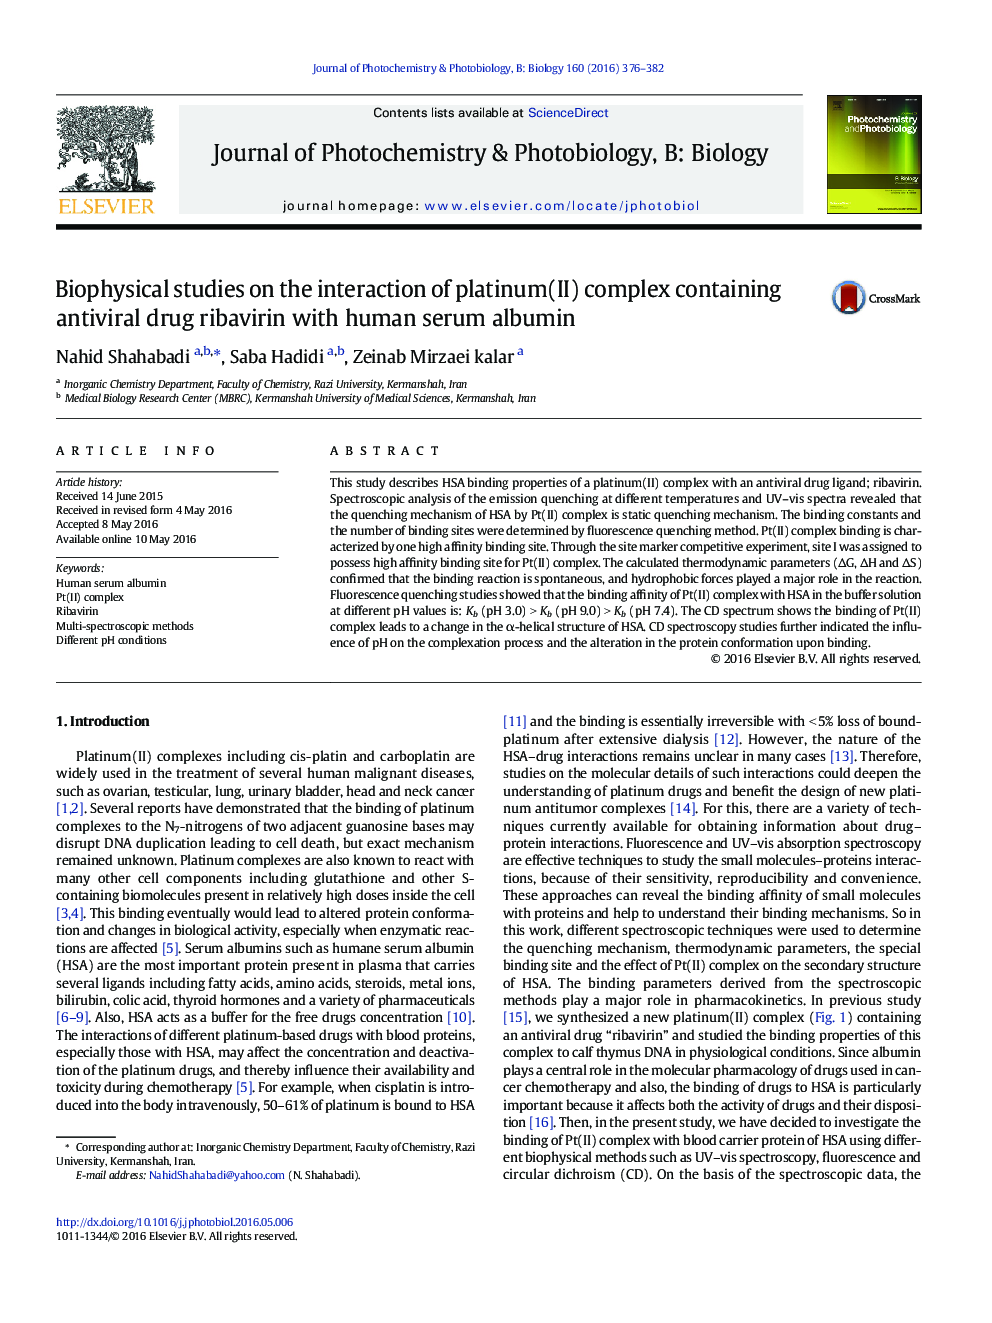 Biophysical studies on the interaction of platinum(II) complex containing antiviral drug ribavirin with human serum albumin